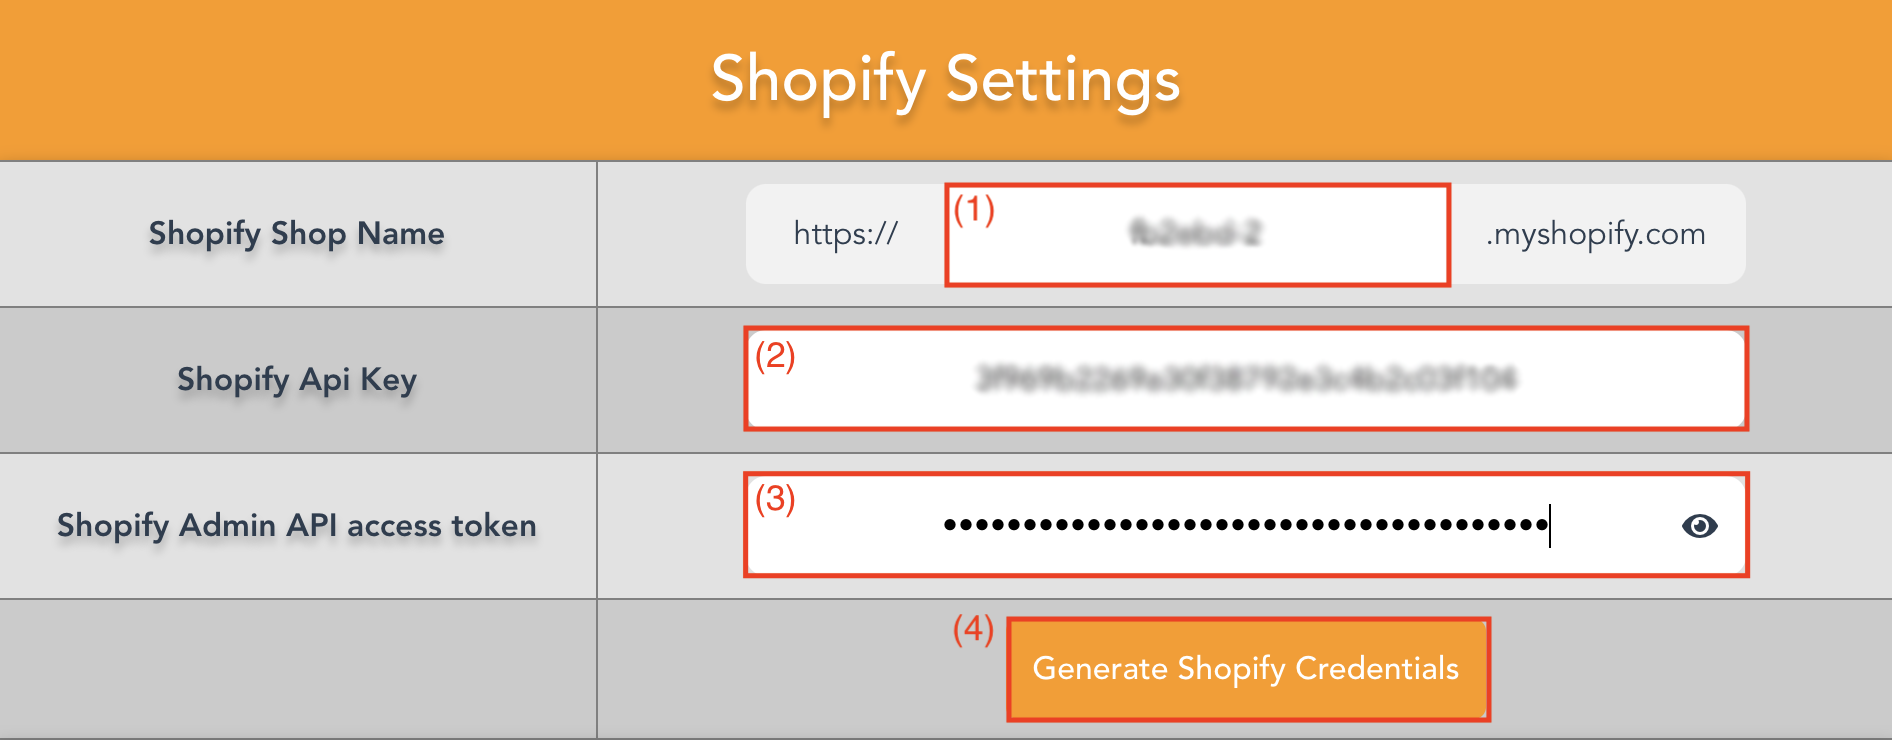 Shopify Store Settings